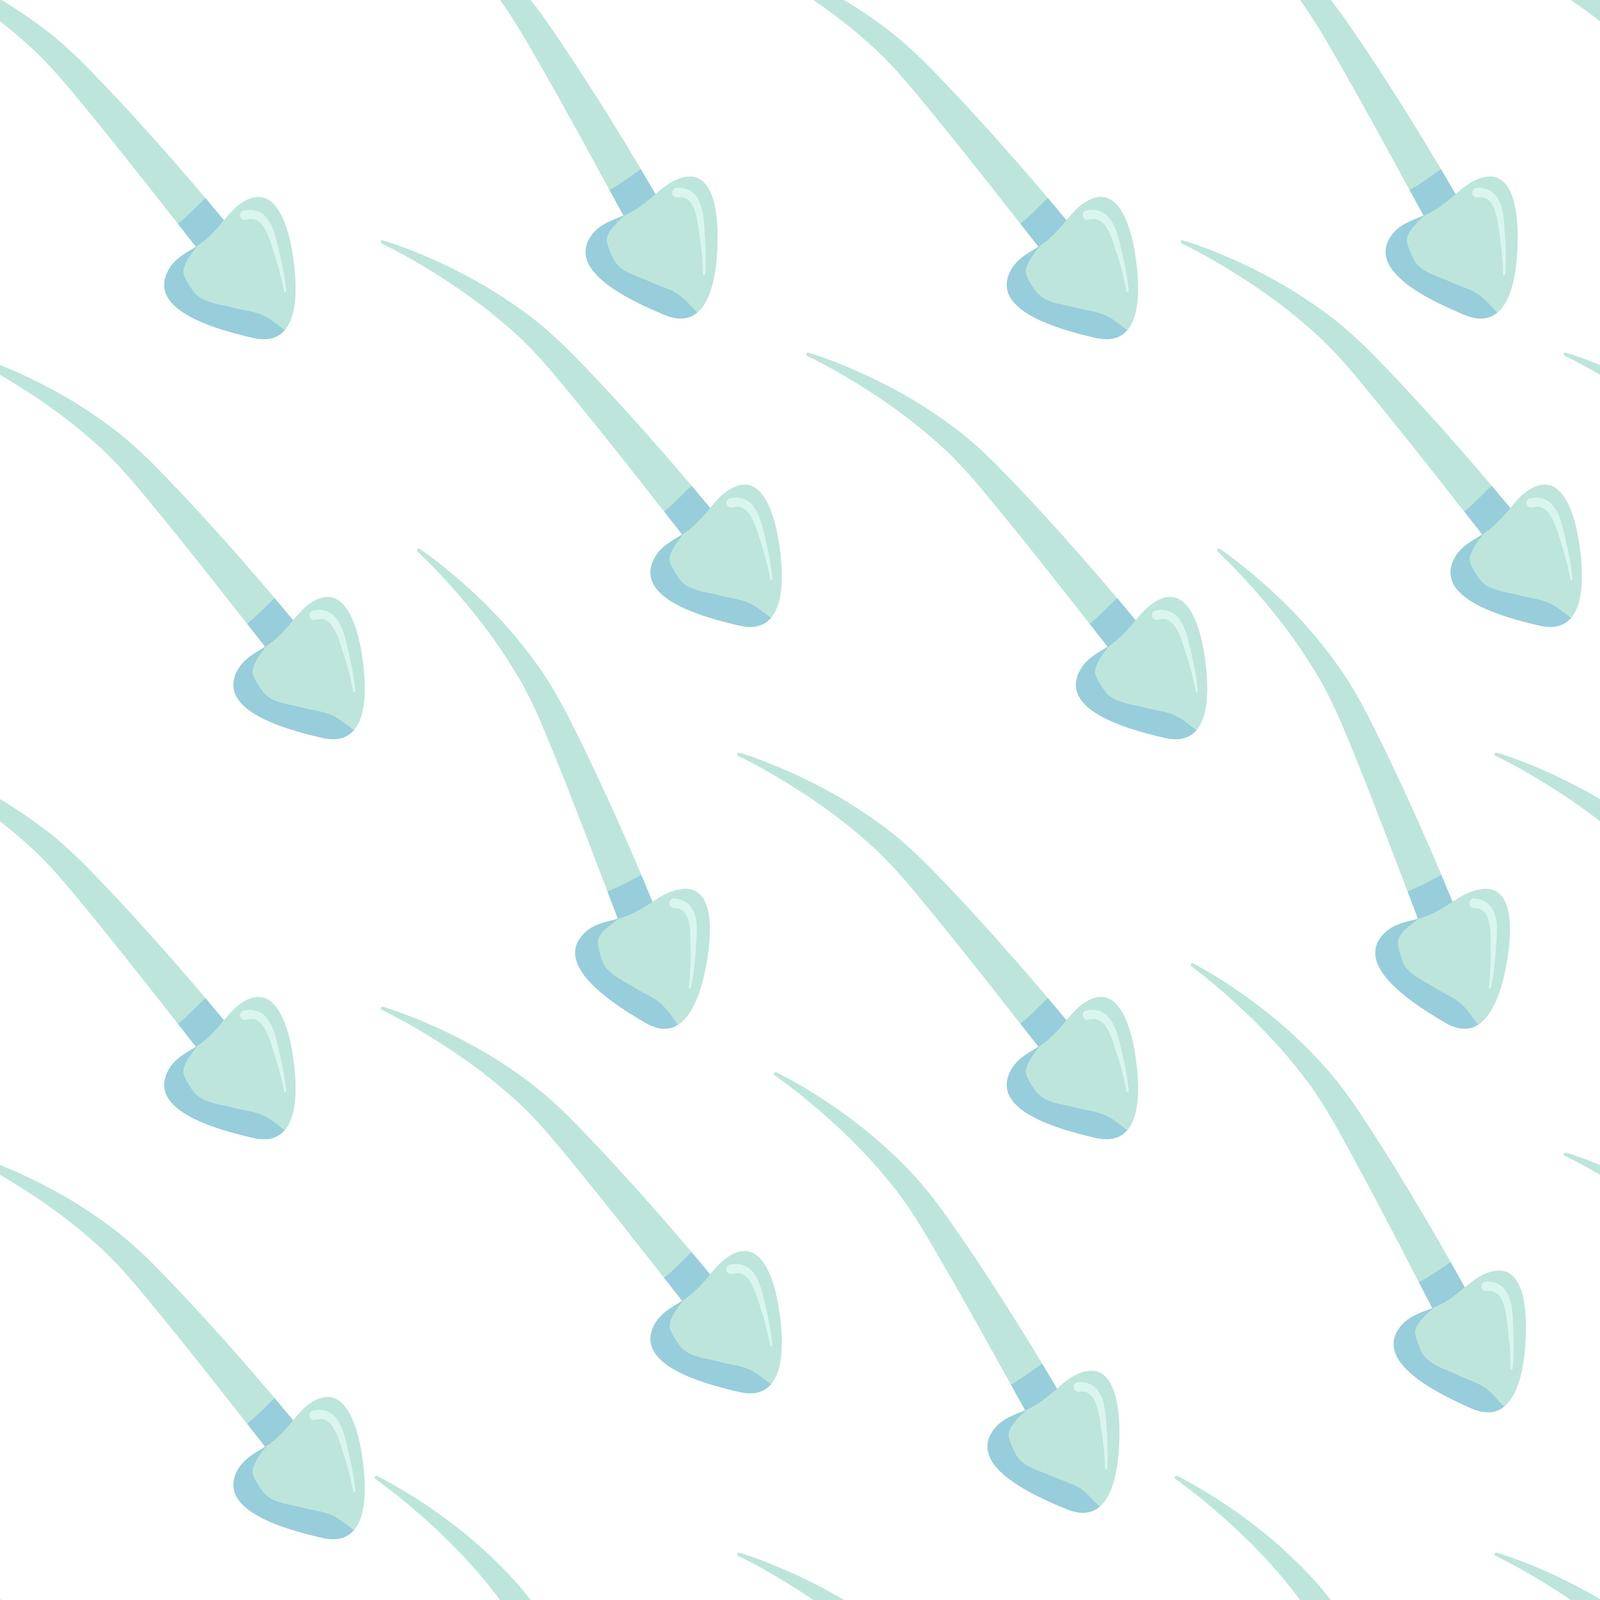 Sperm cells seamless pattern background. Semen vector illustration. Fertility concept.